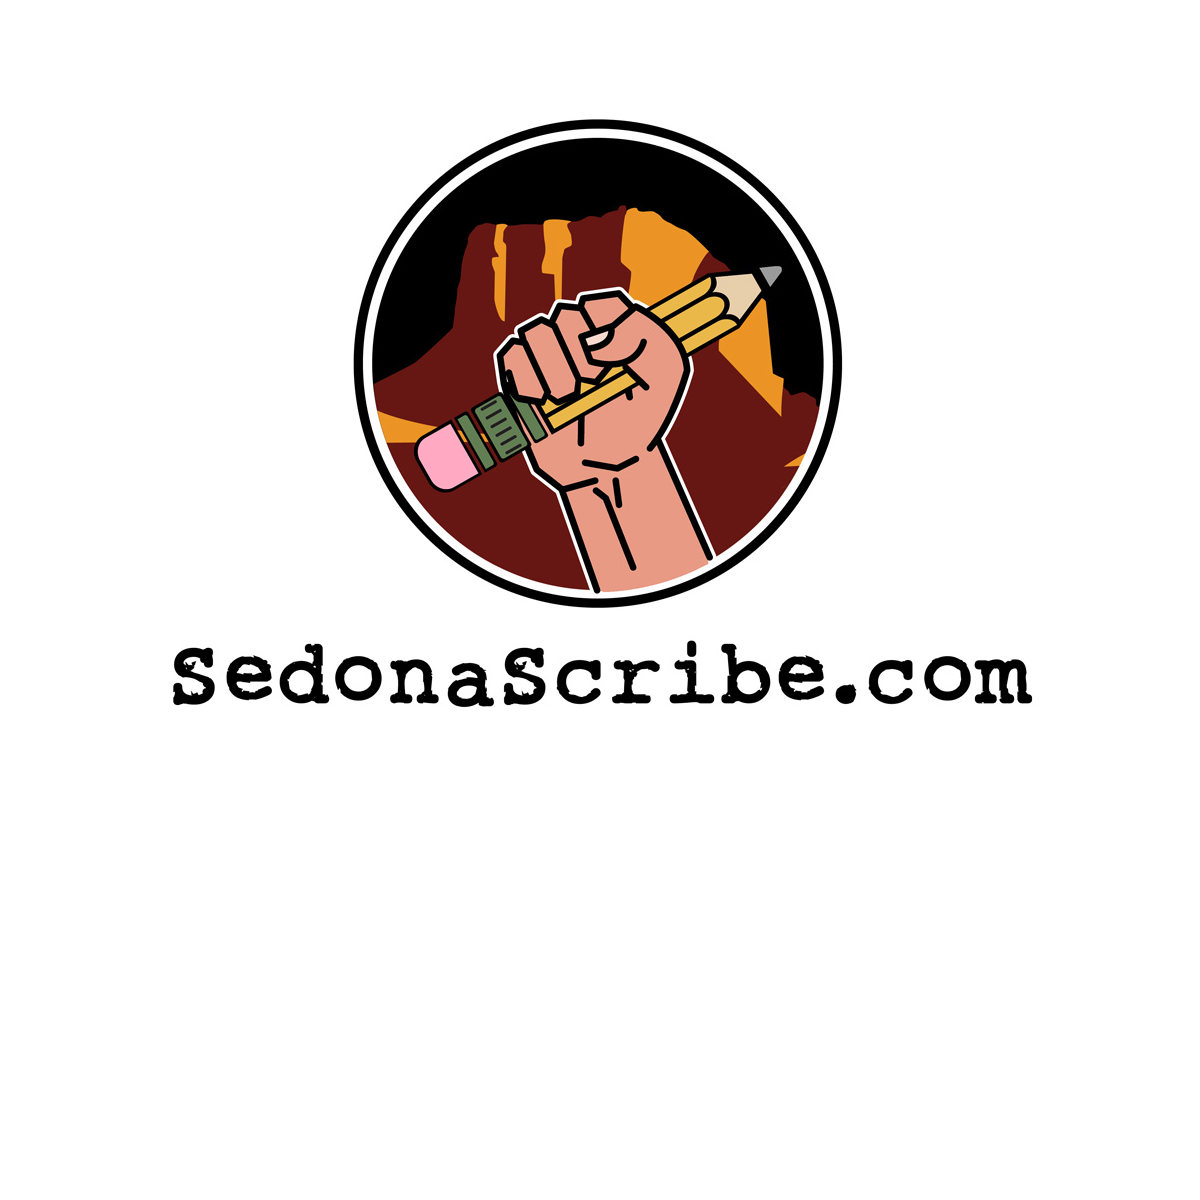 A complete backup of sedonascribe.com